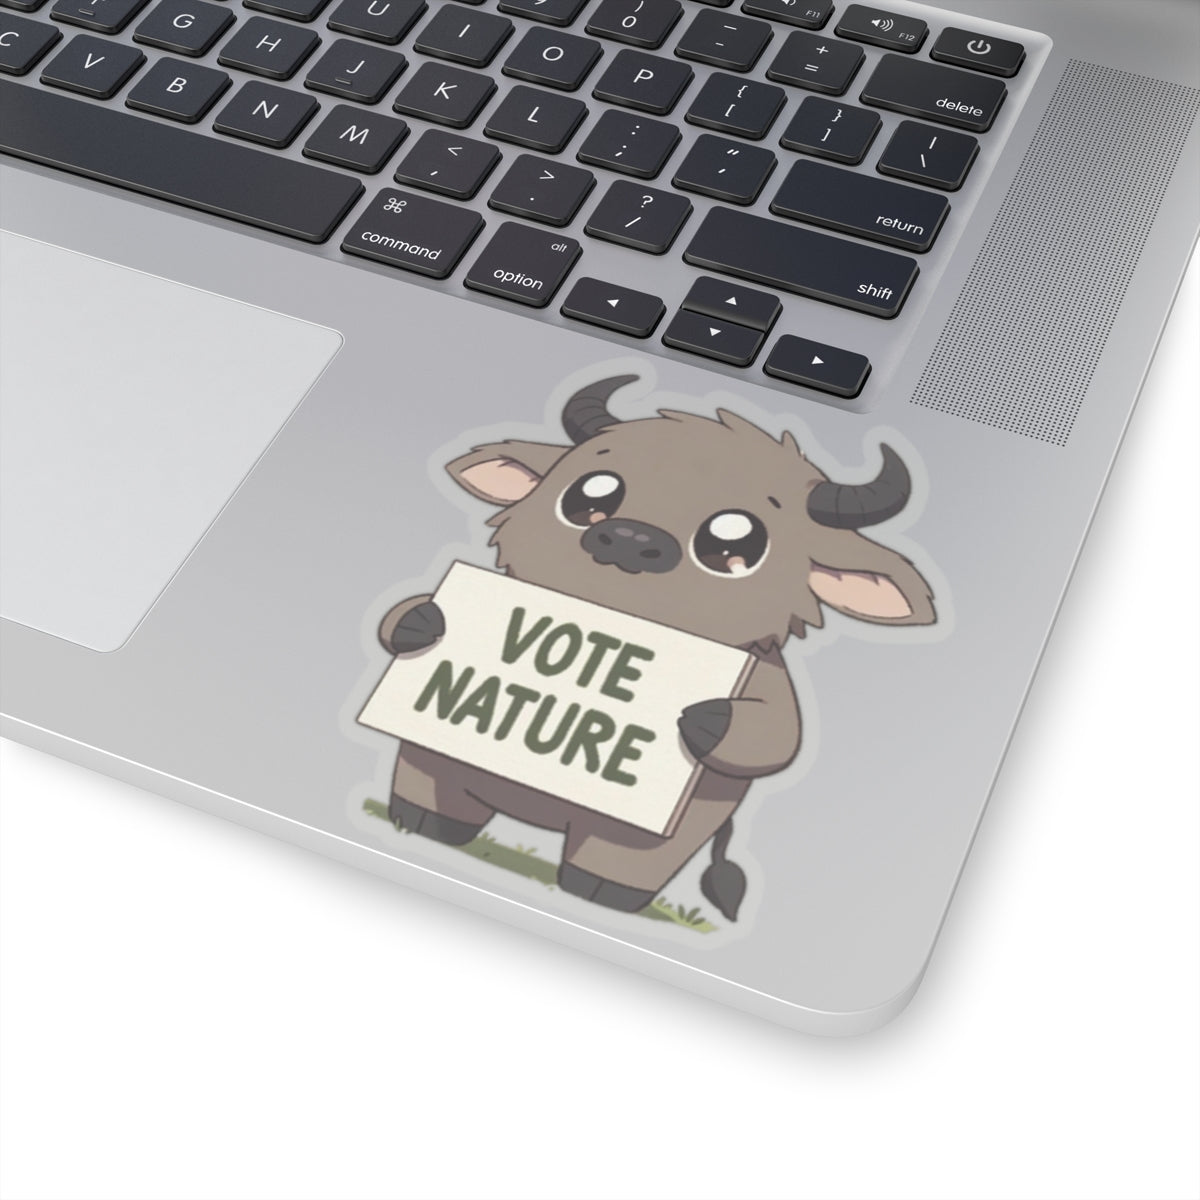 Inspirational Cute Water Buffalo Statement vinyl Sticker: Vote Nature! laptop, kindle, phone, ipad, instrument case, notebook, mood board